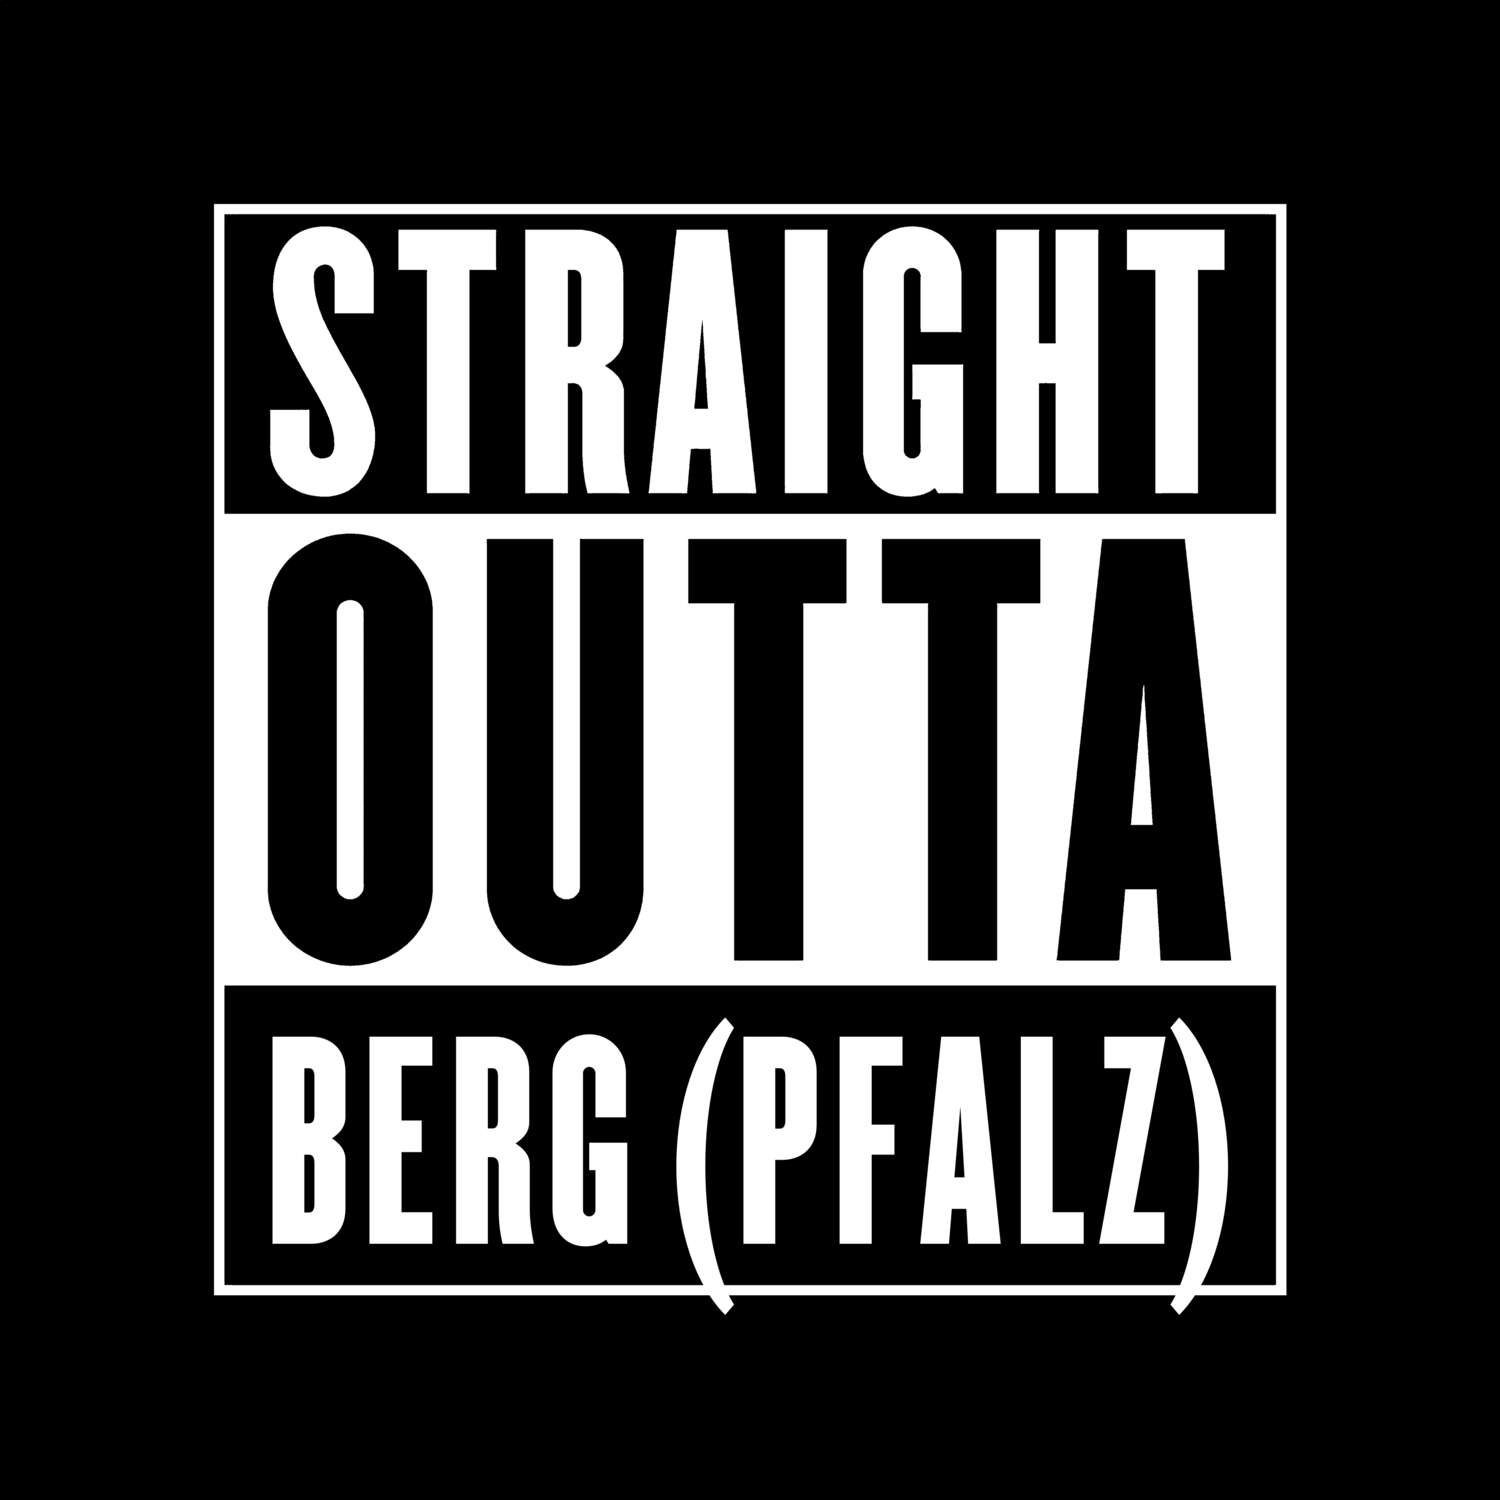 Berg (Pfalz) T-Shirt »Straight Outta«